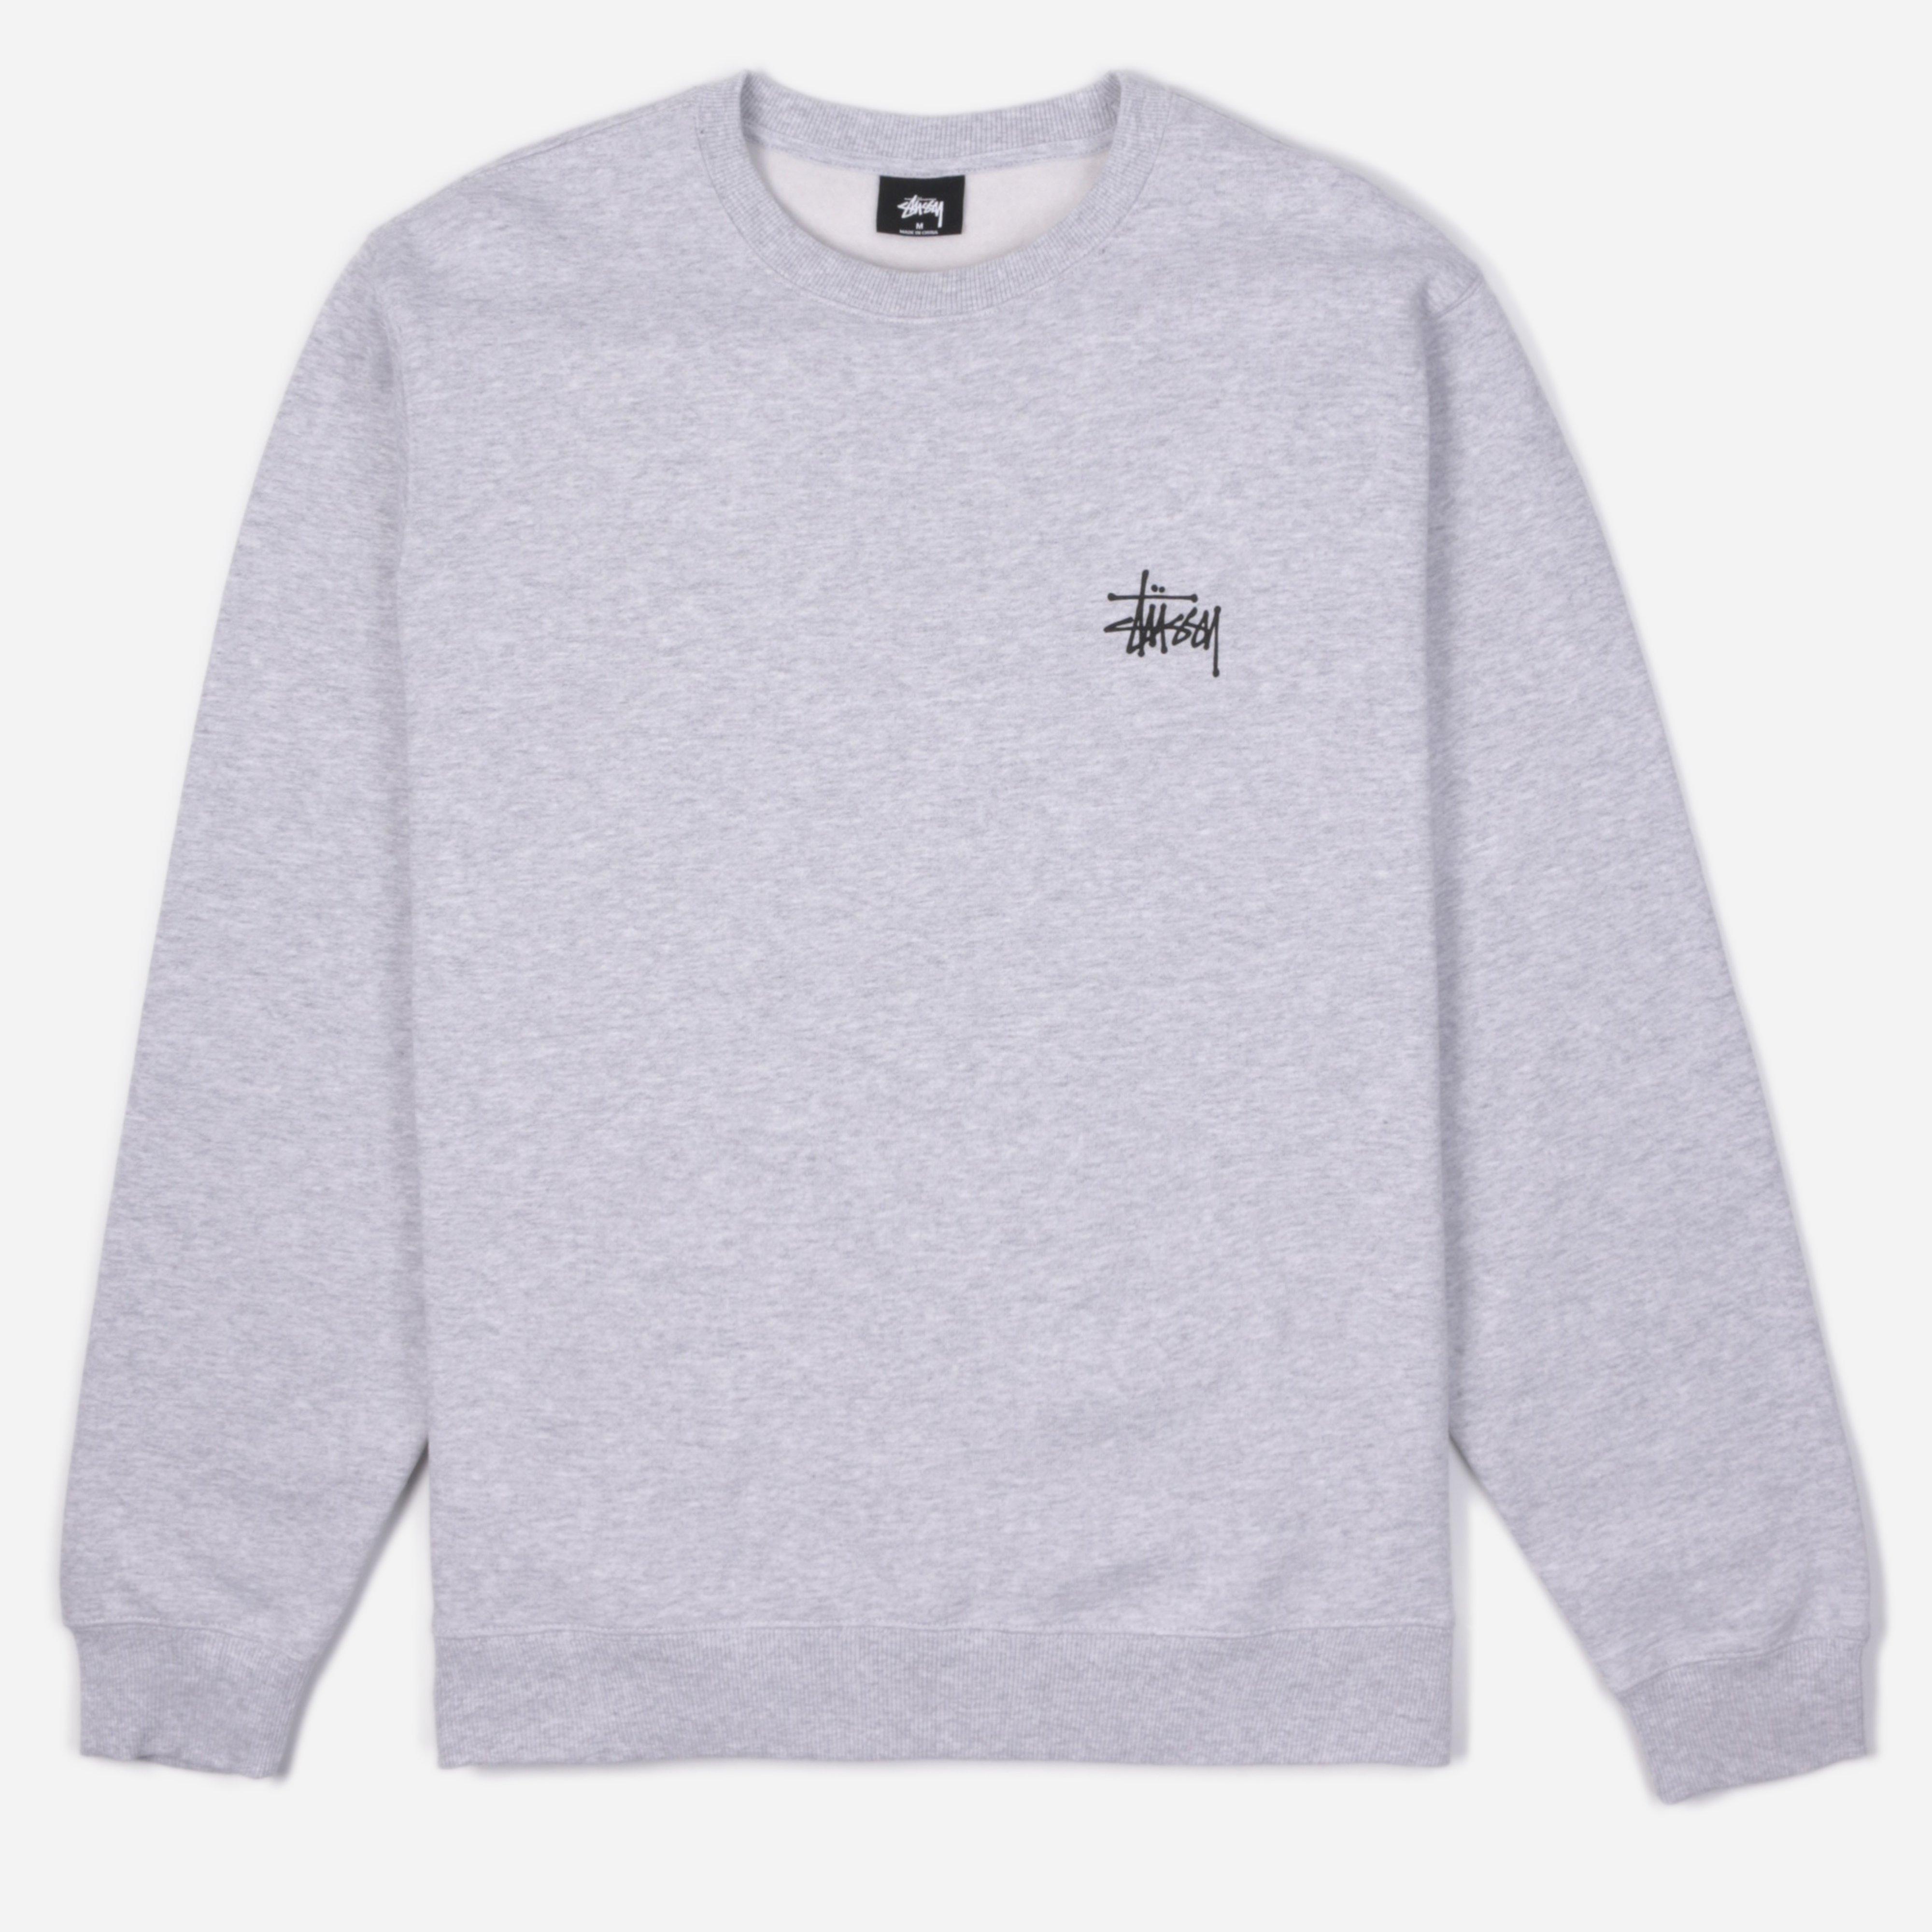 Stussy Basic Crew Sweatshirt in Grey (Gray) for Men - Lyst